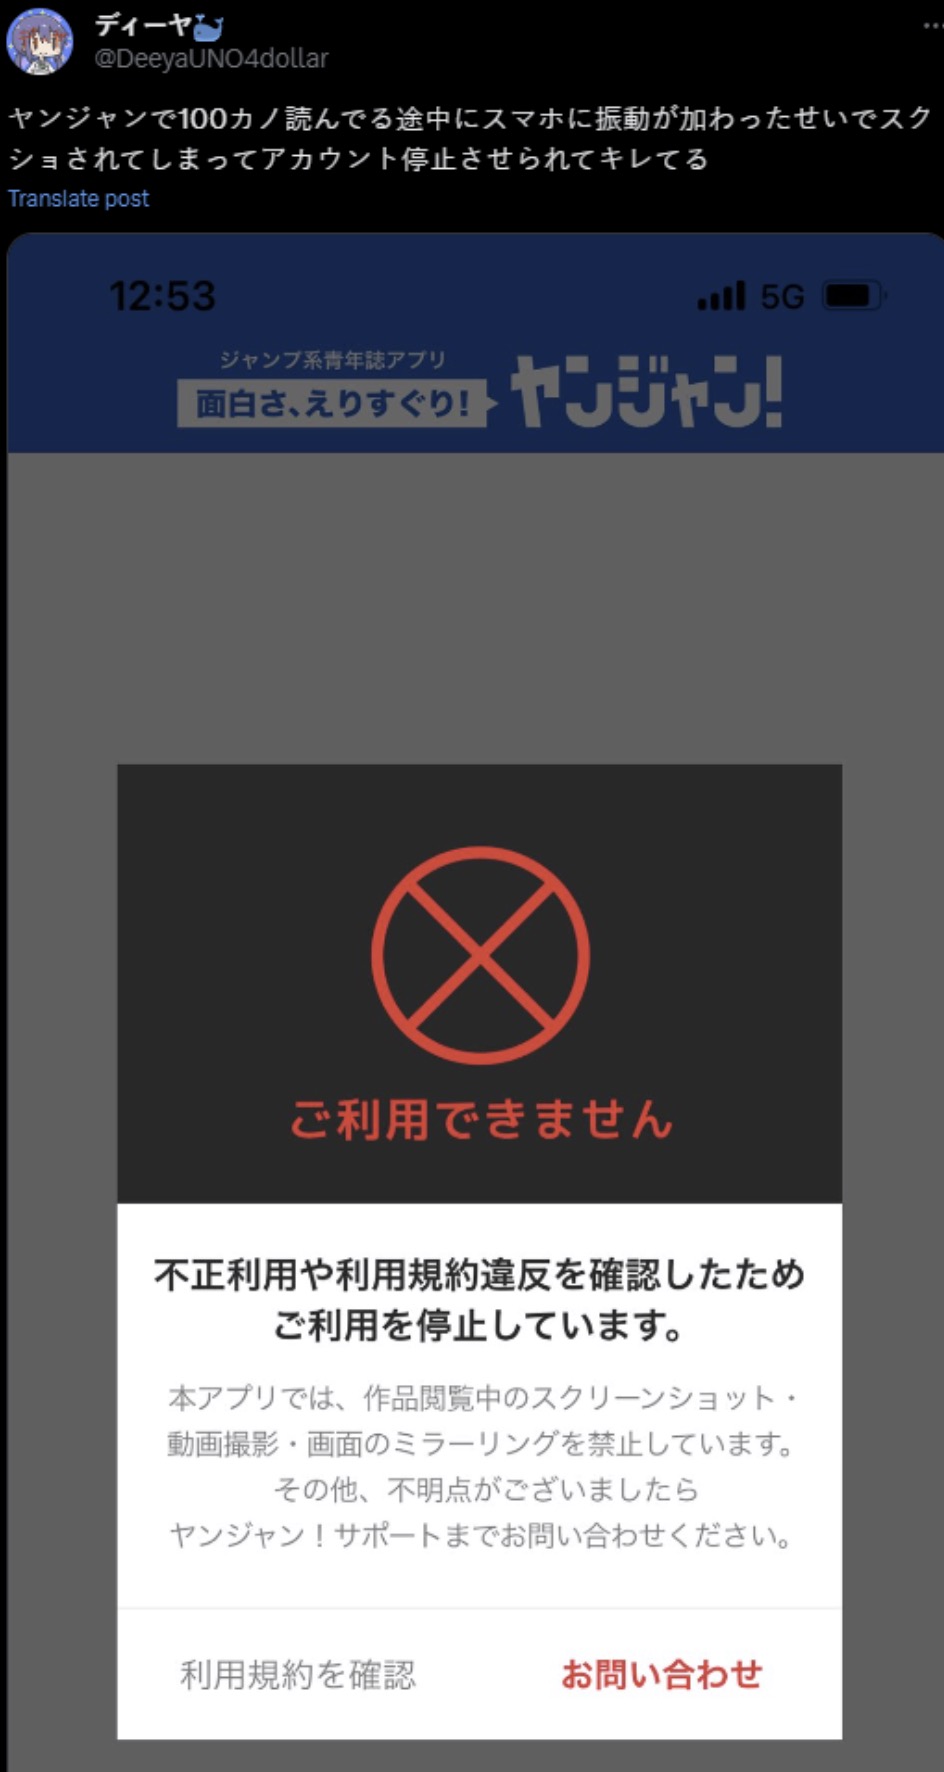 Manga App User Banned for Alleged Fraudulent Screenshots